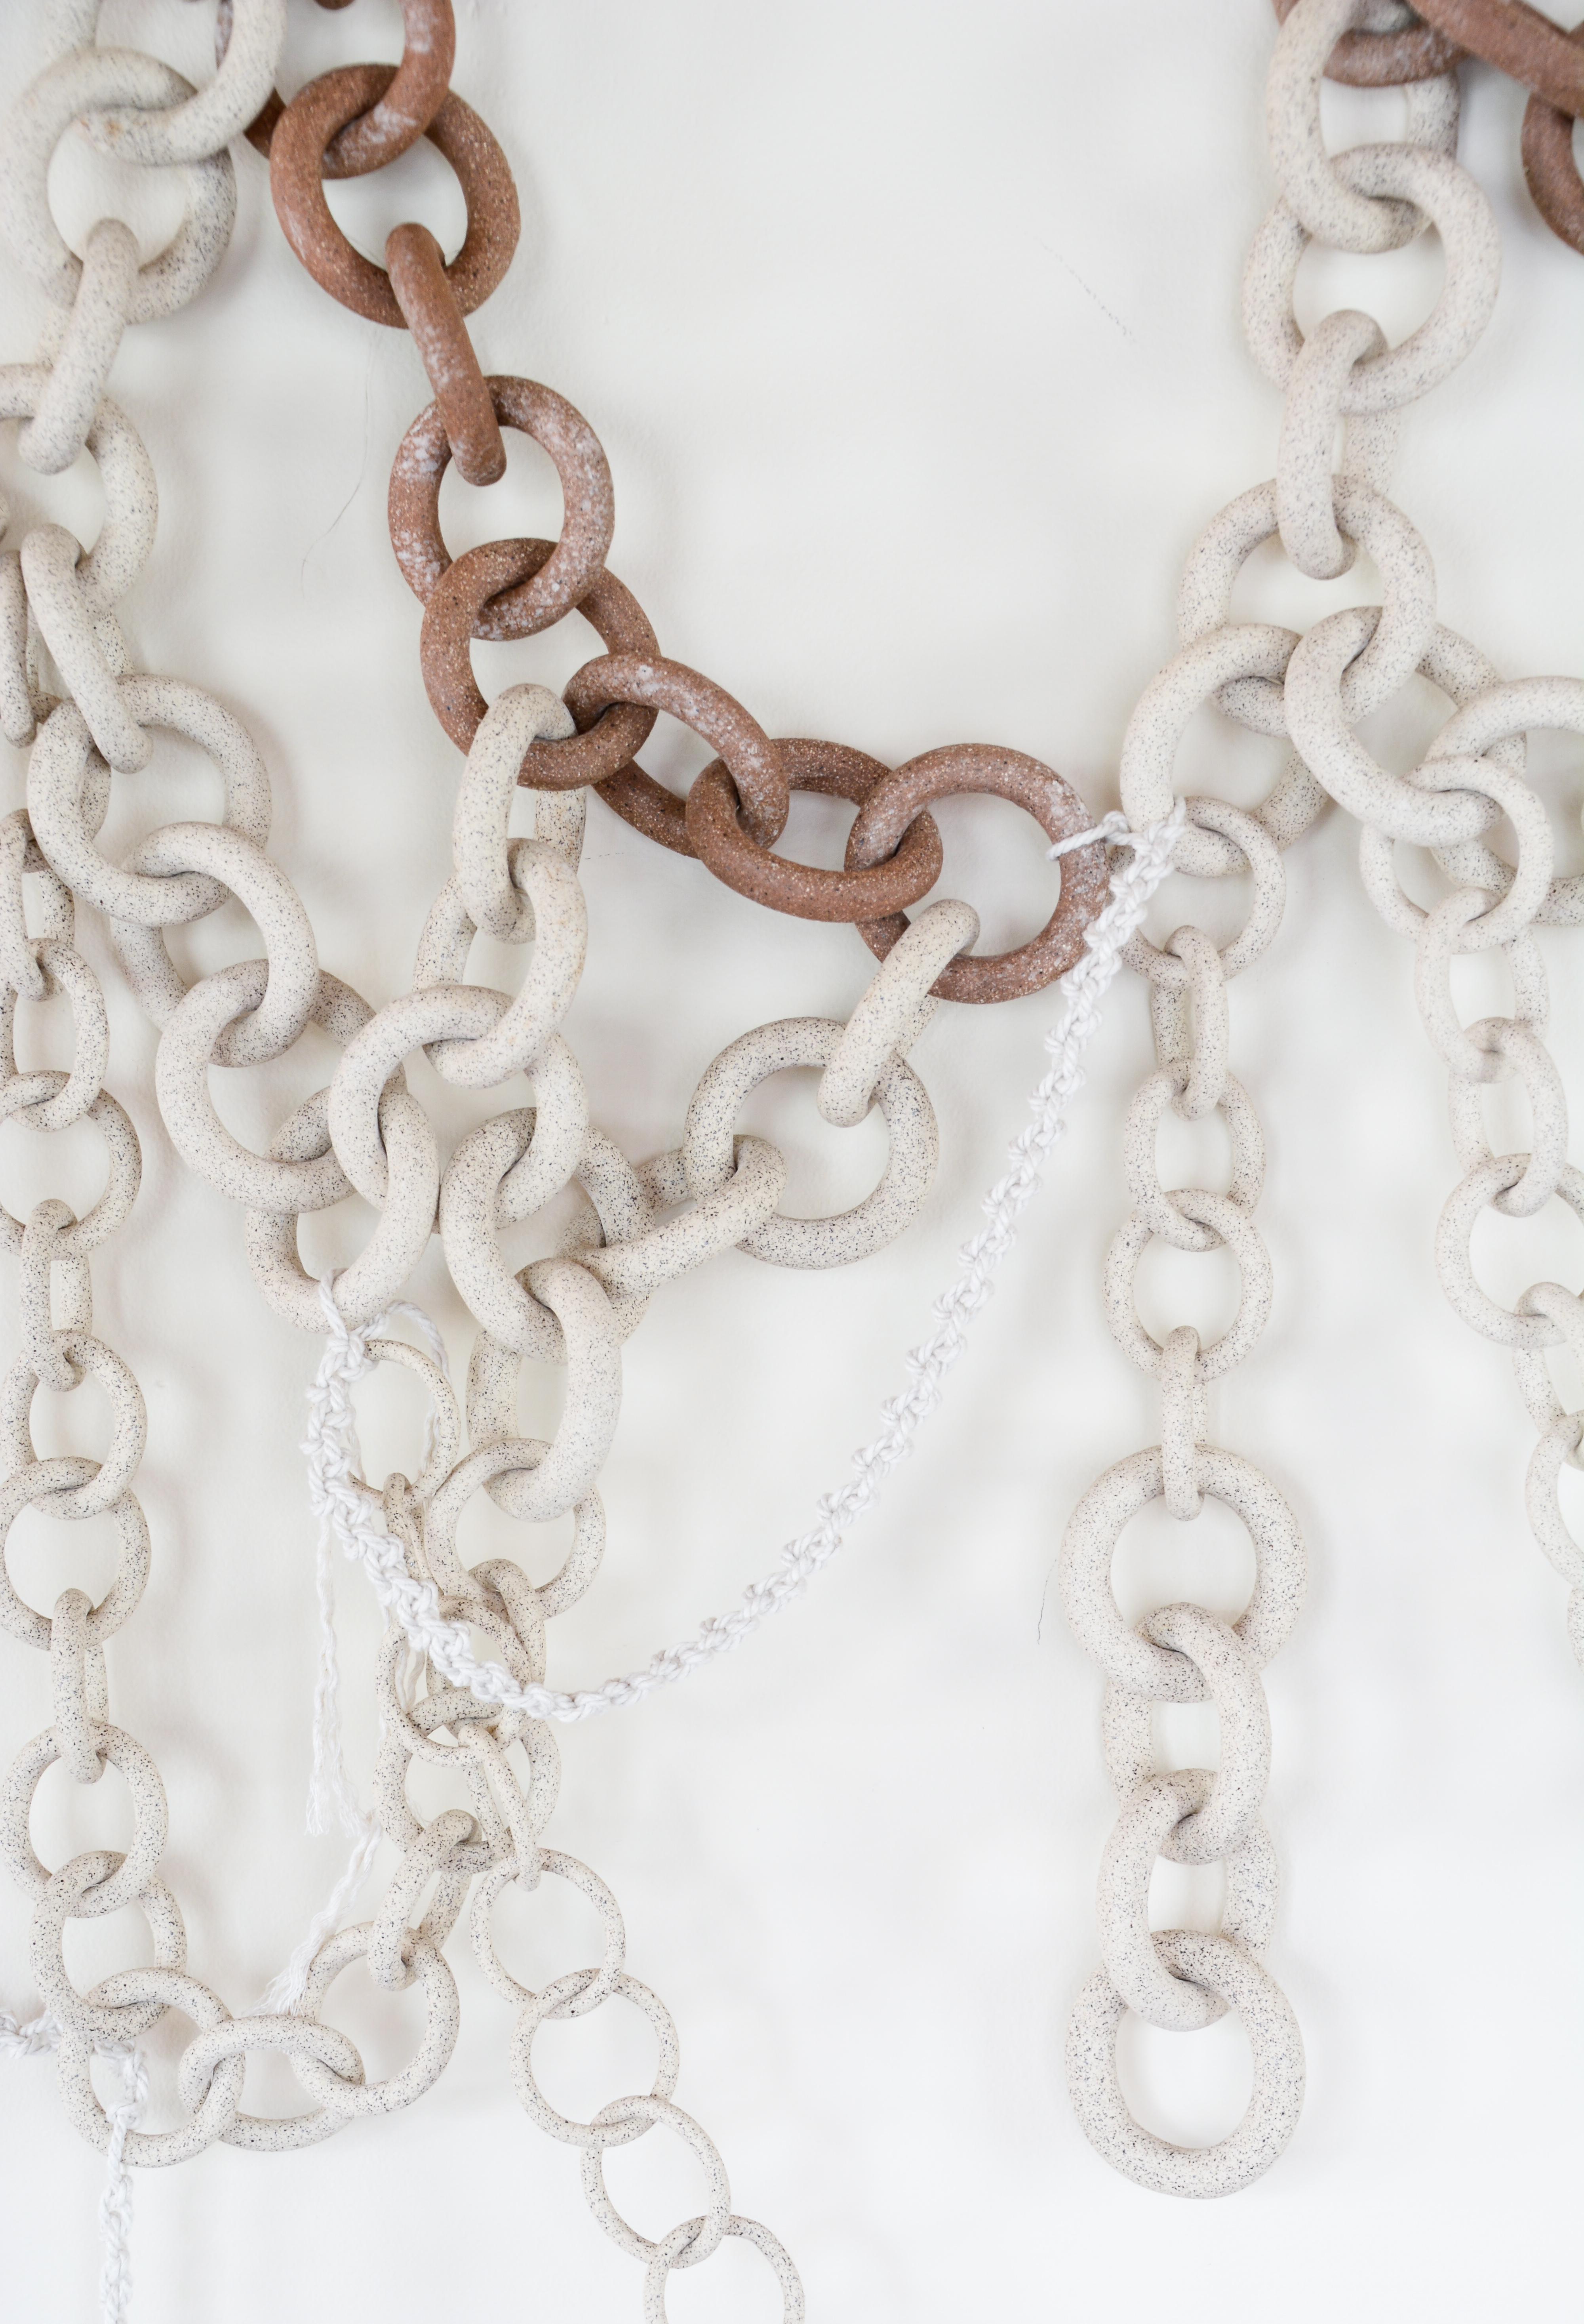 Organic Modern Ceramic Link Chain Wall Sculpture